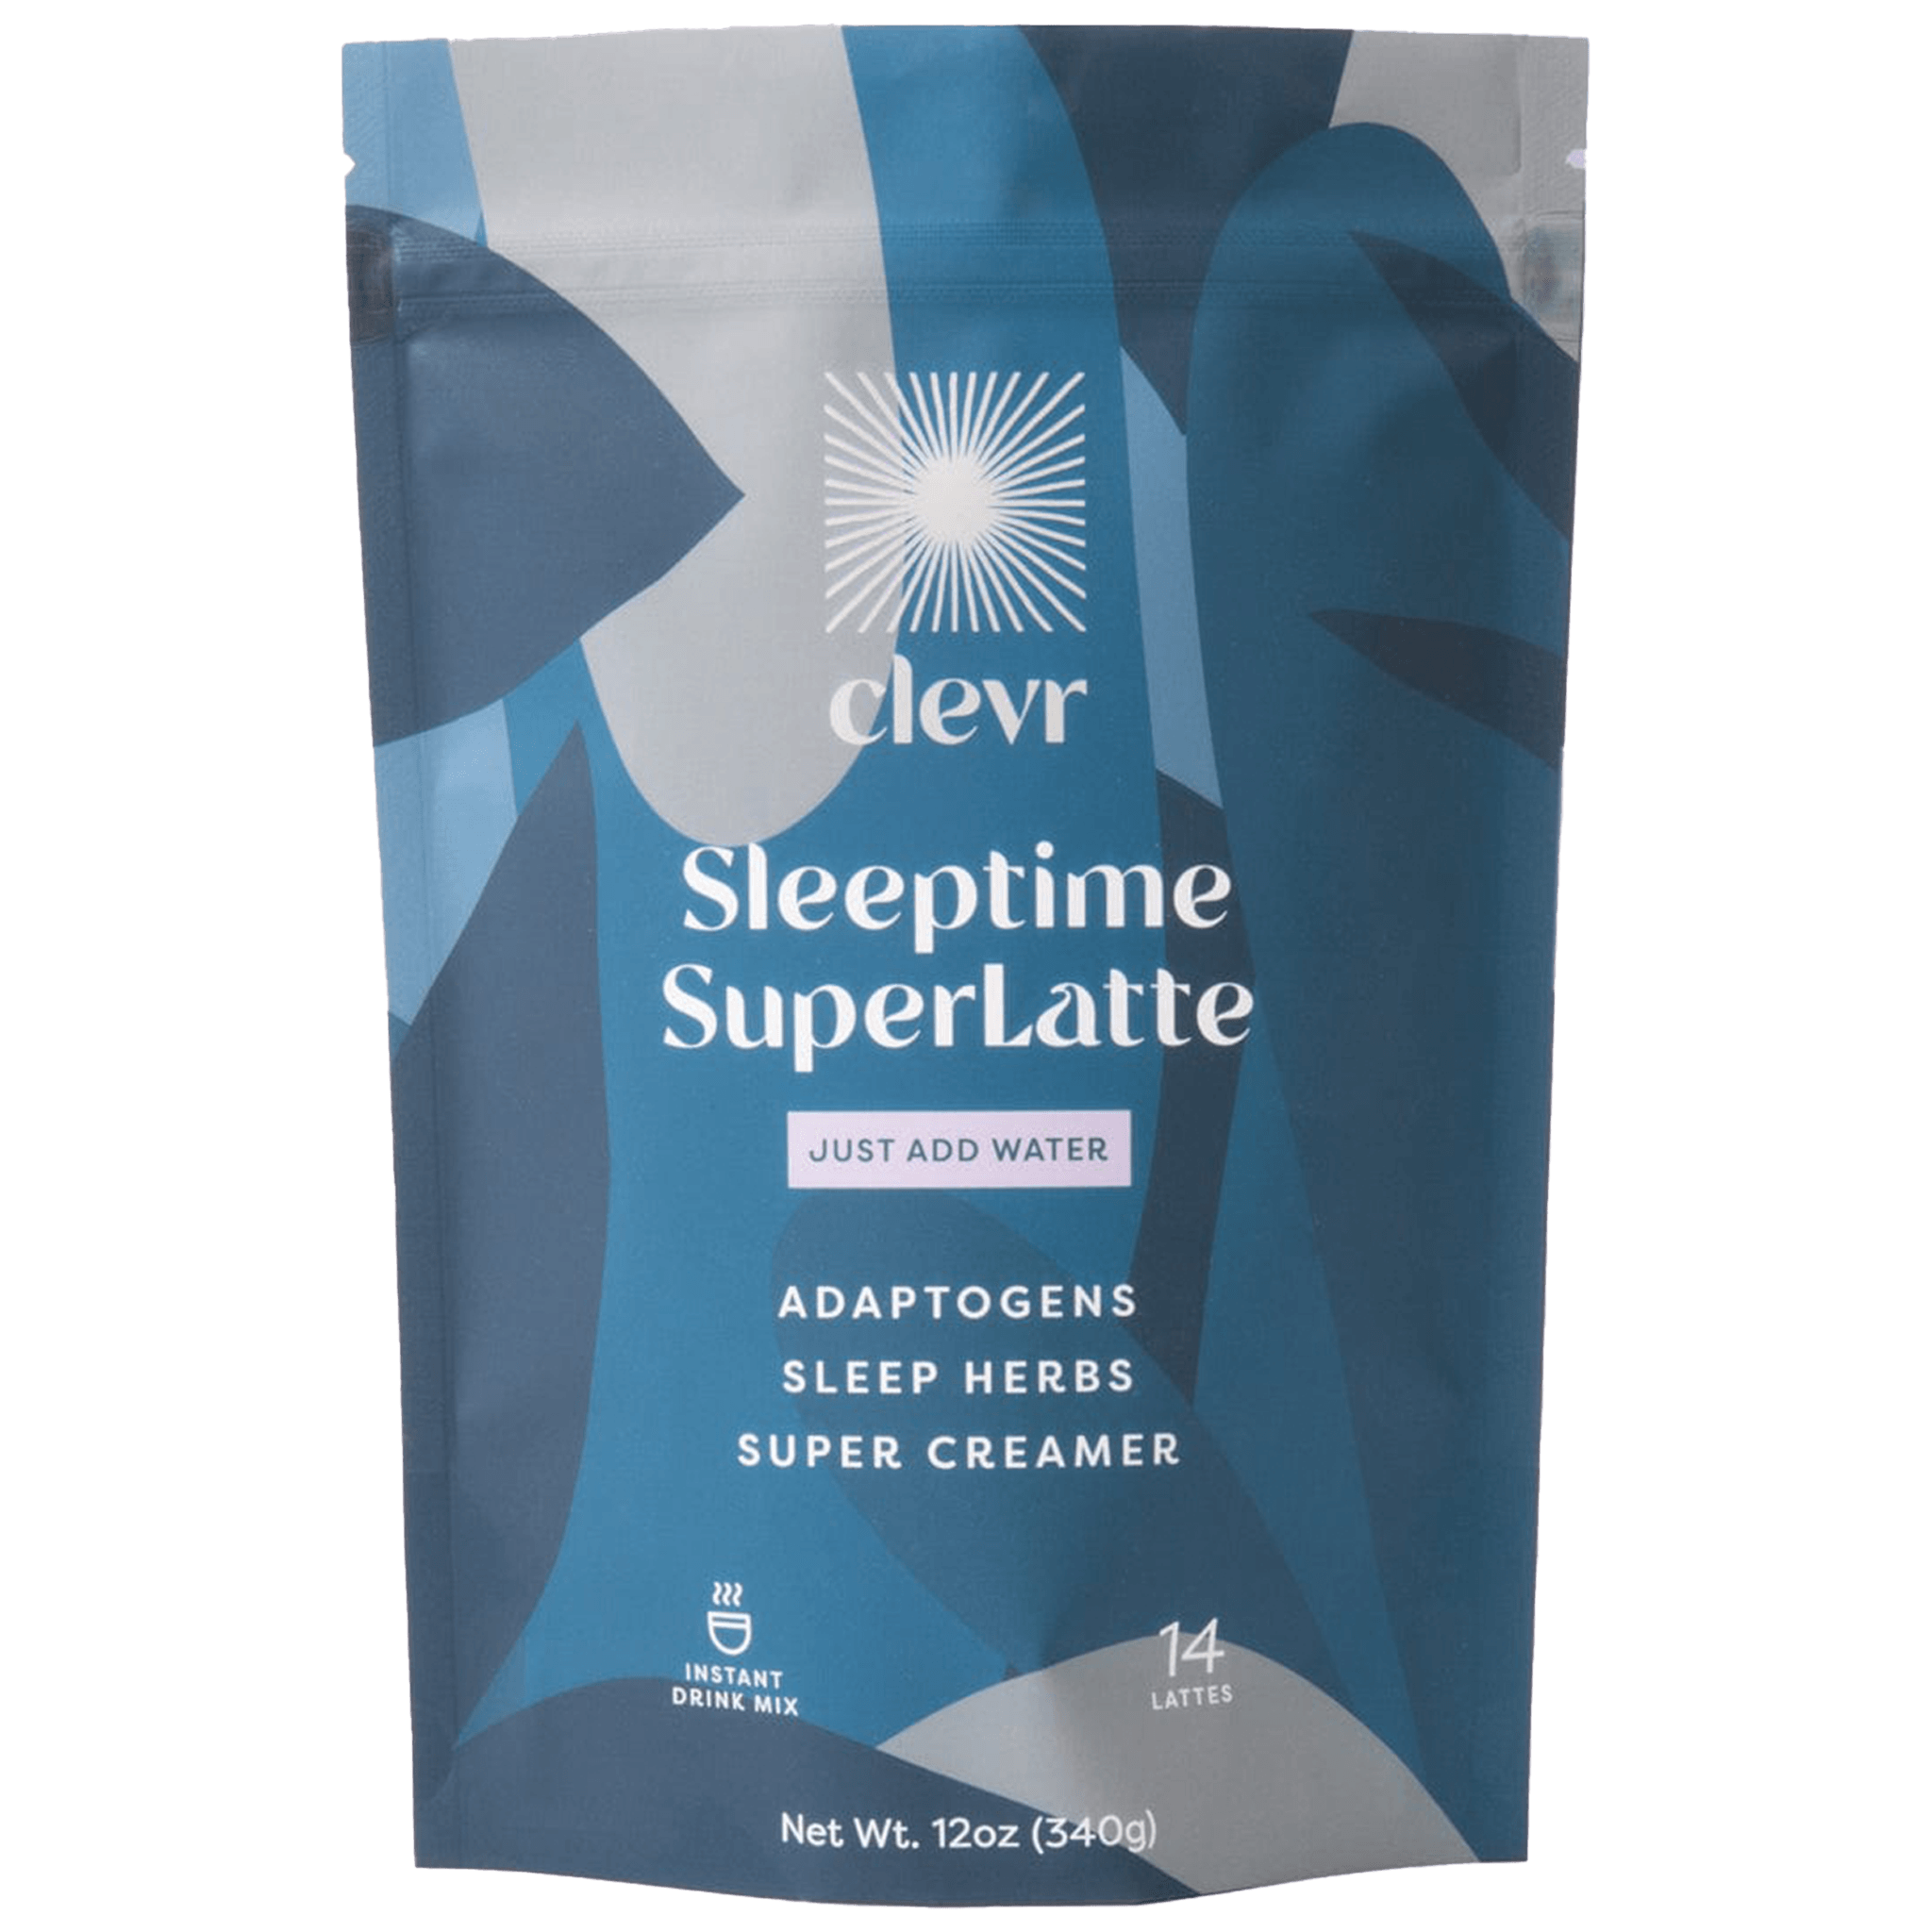 Sleeptime SuperLatte - Clevr Blends - Consumerhaus